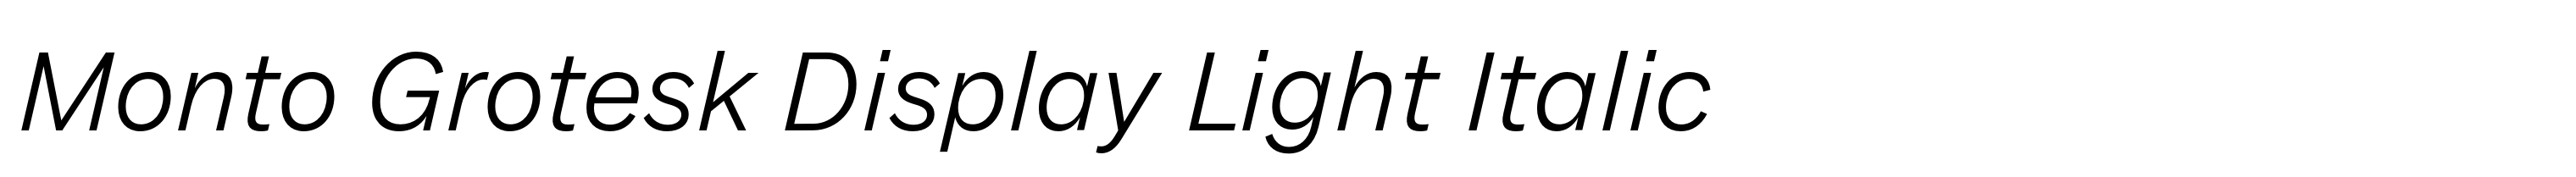 Monto Grotesk Display Light Italic